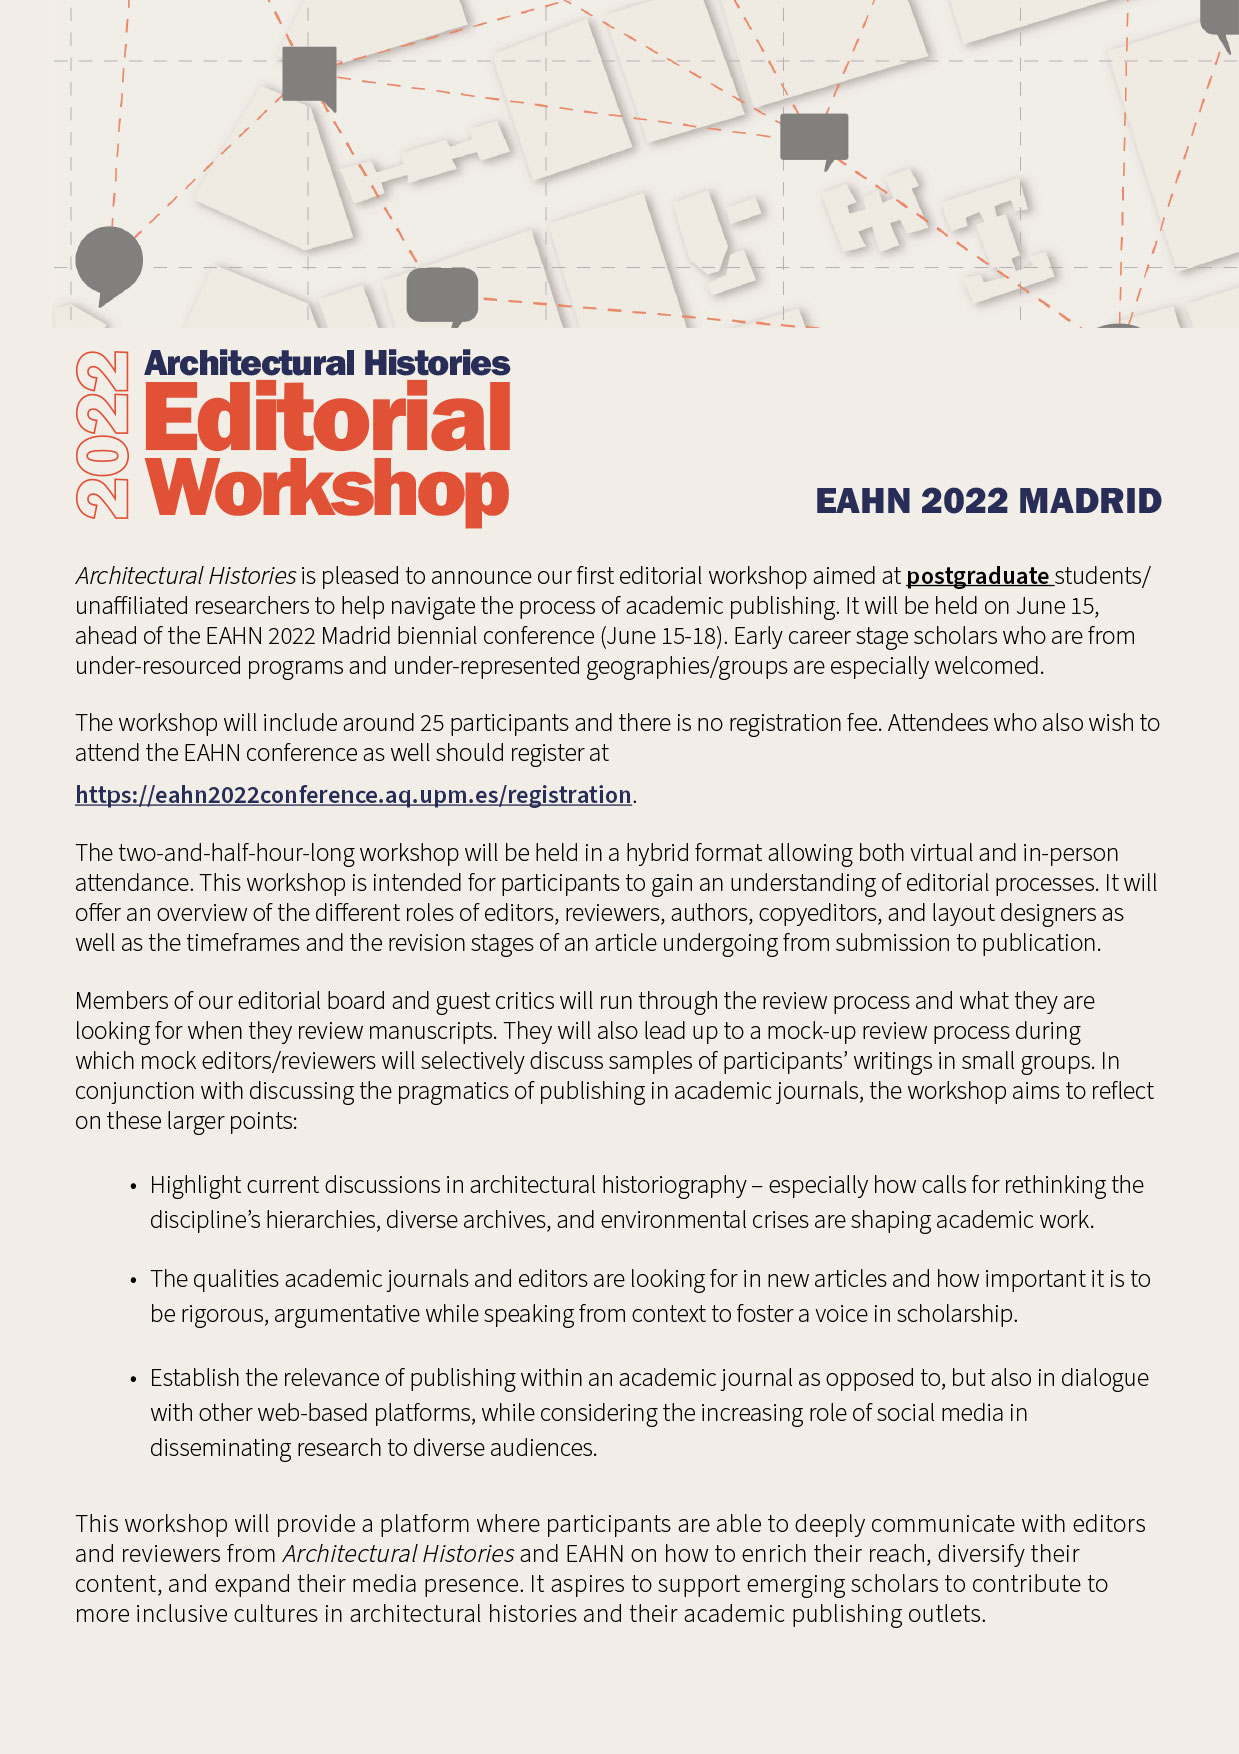 Editorial Workshop, EAHN Madrid, Biennial Conference